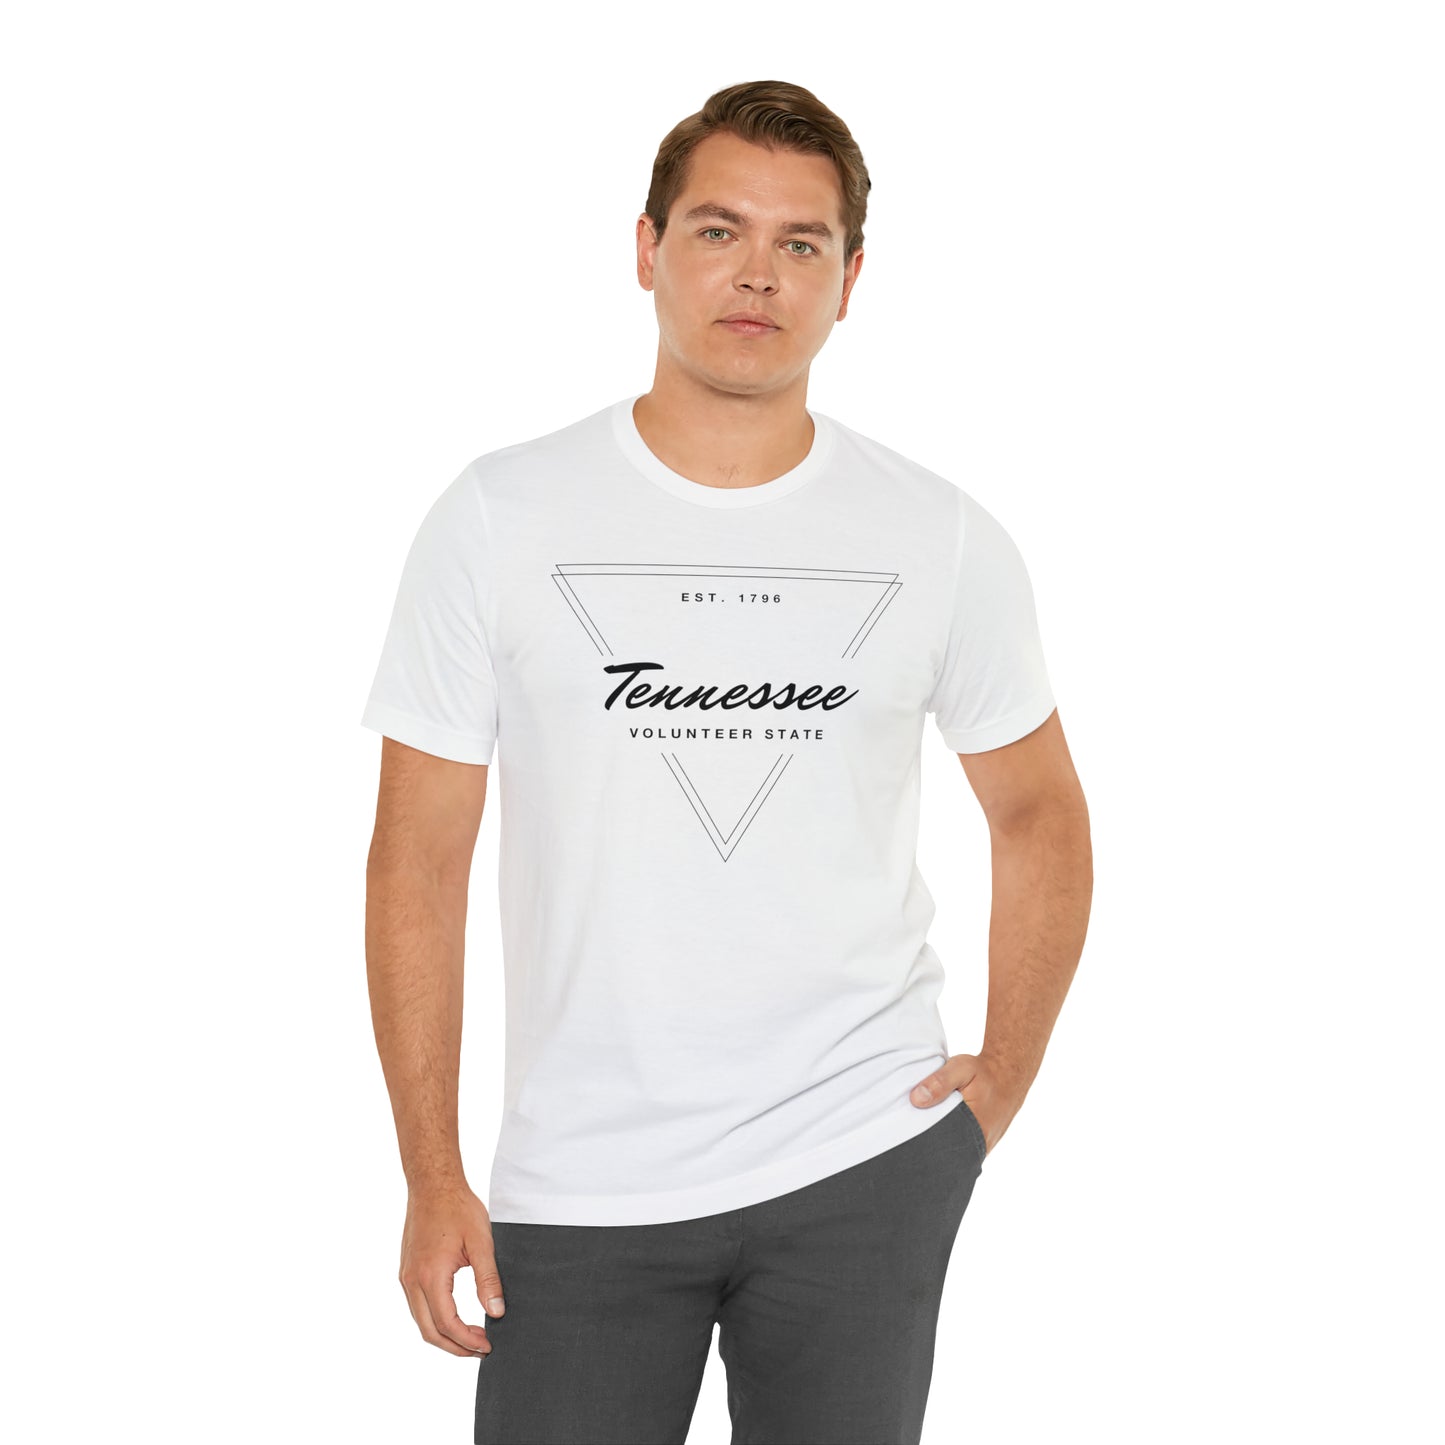 Tennessee Geometric Shirt